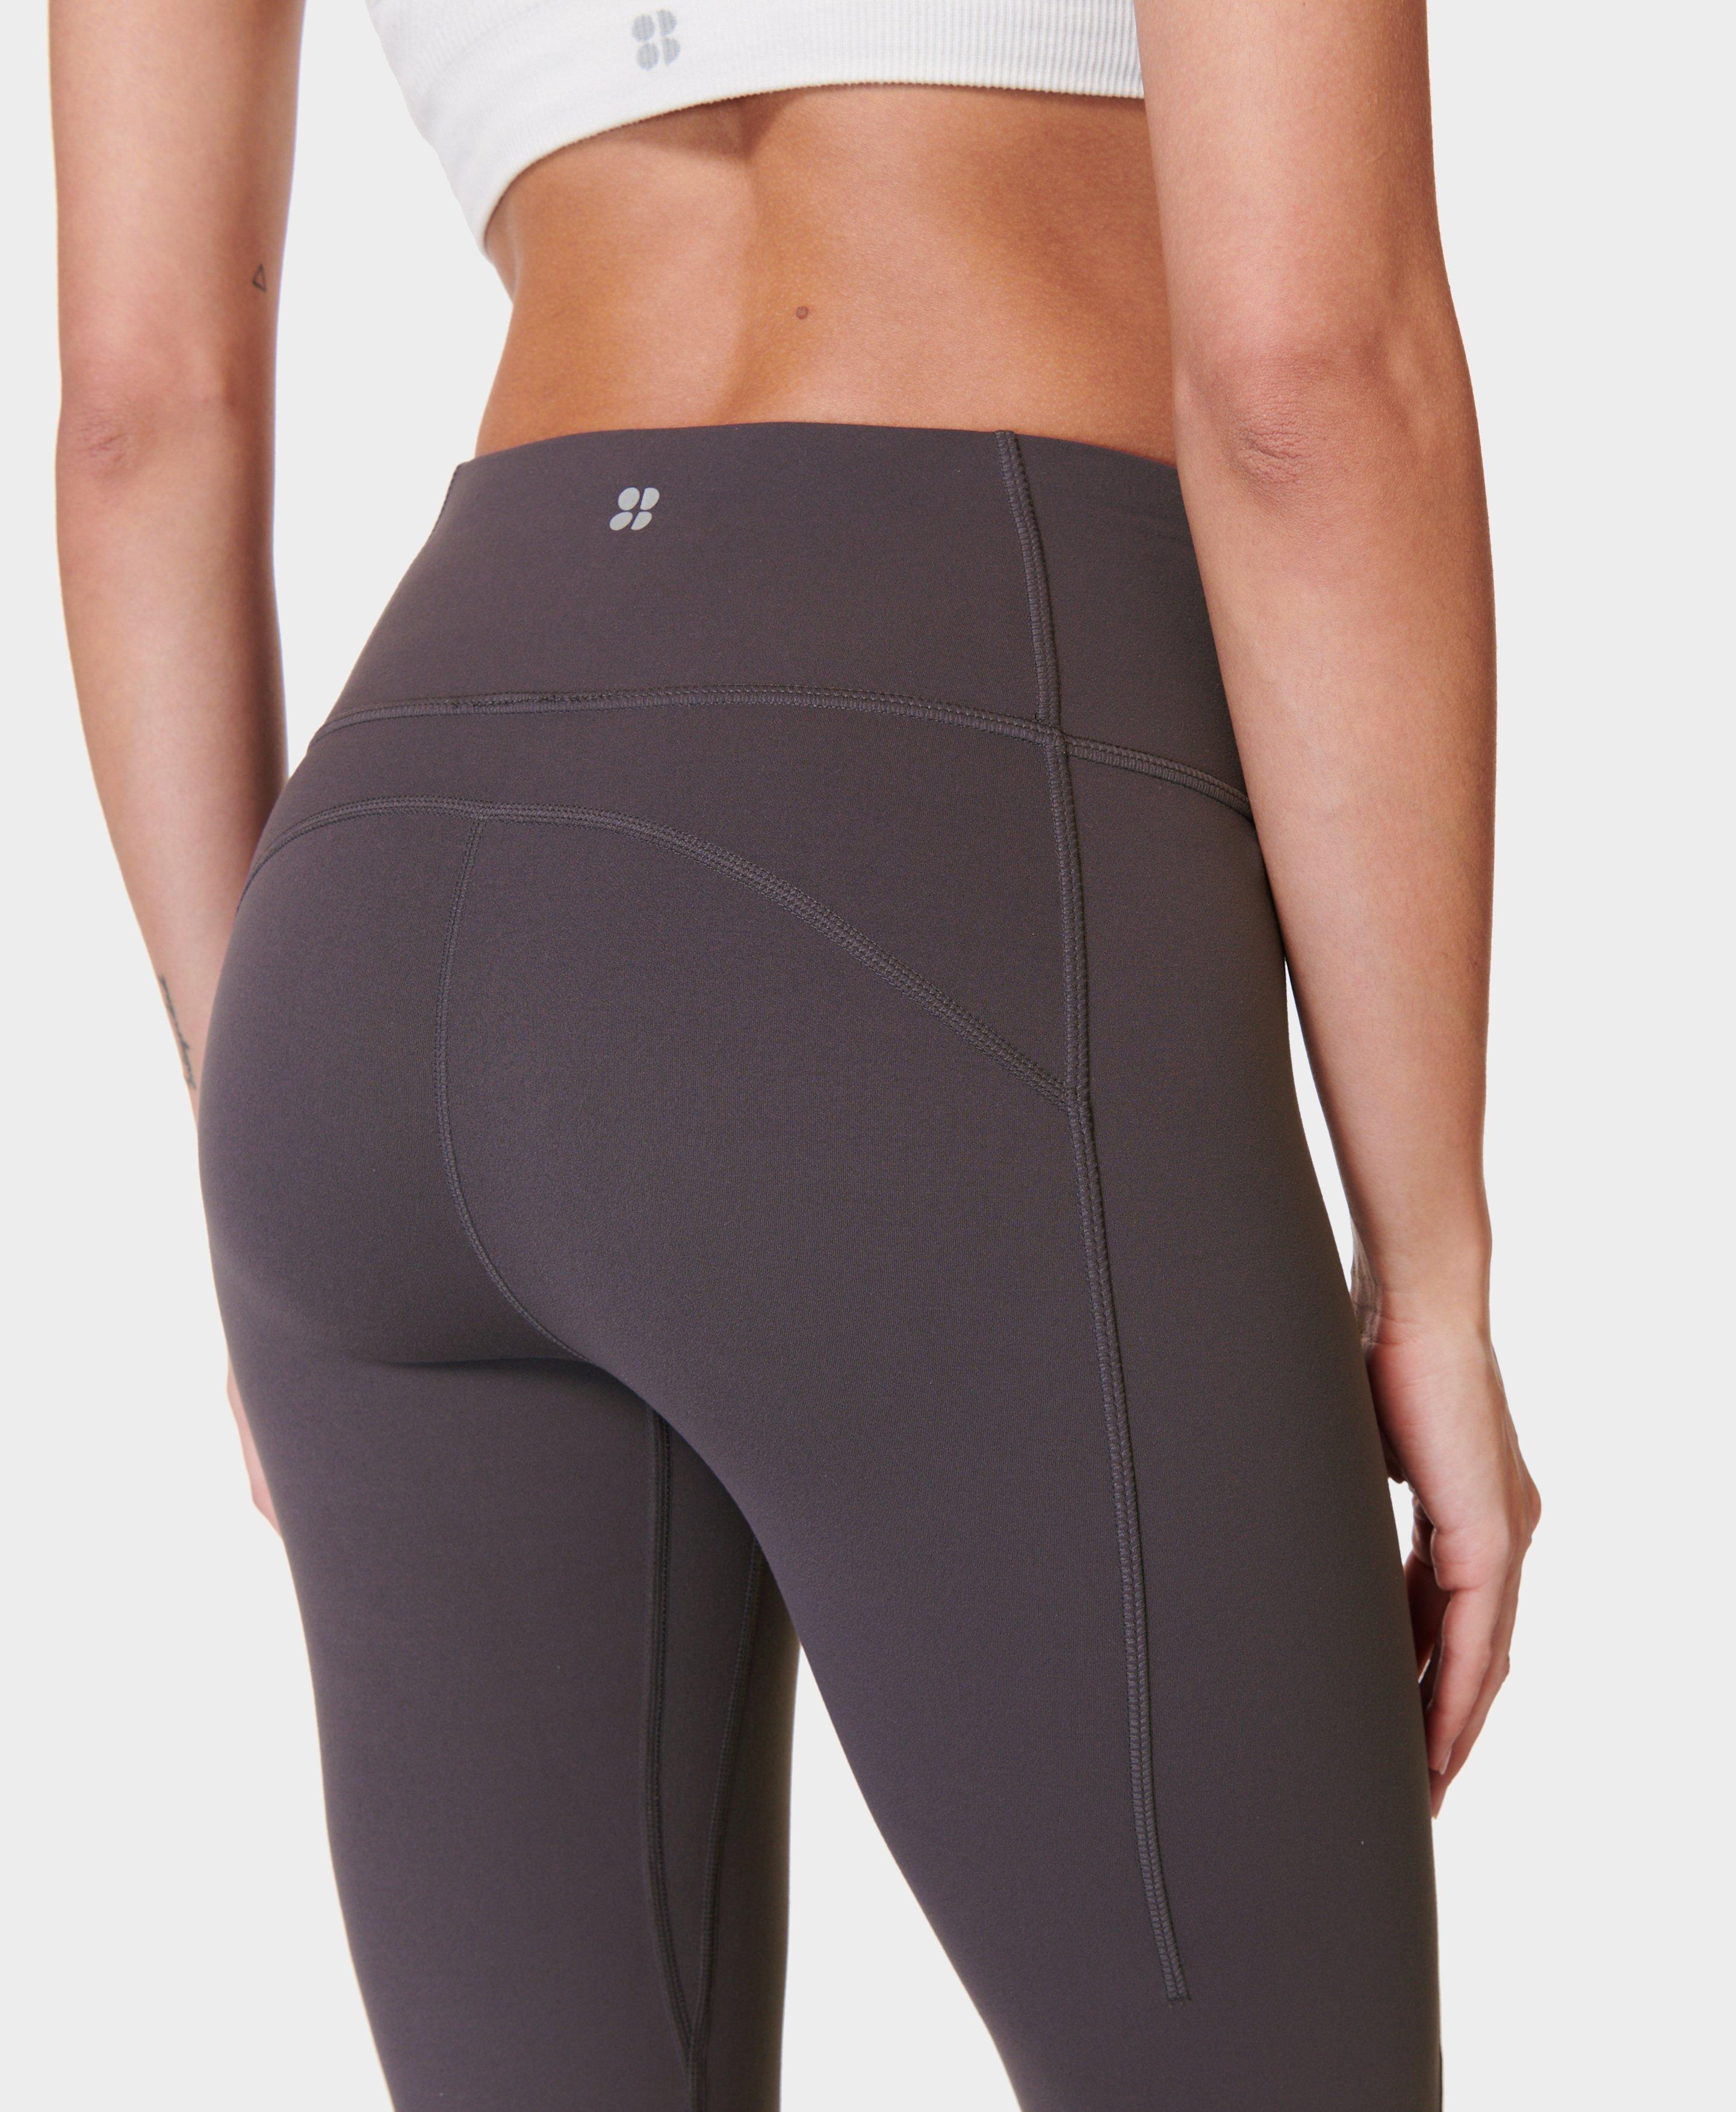 Super Soft Flare Yoga Pants - Urban Grey, Women's Trousers & Yoga Pants